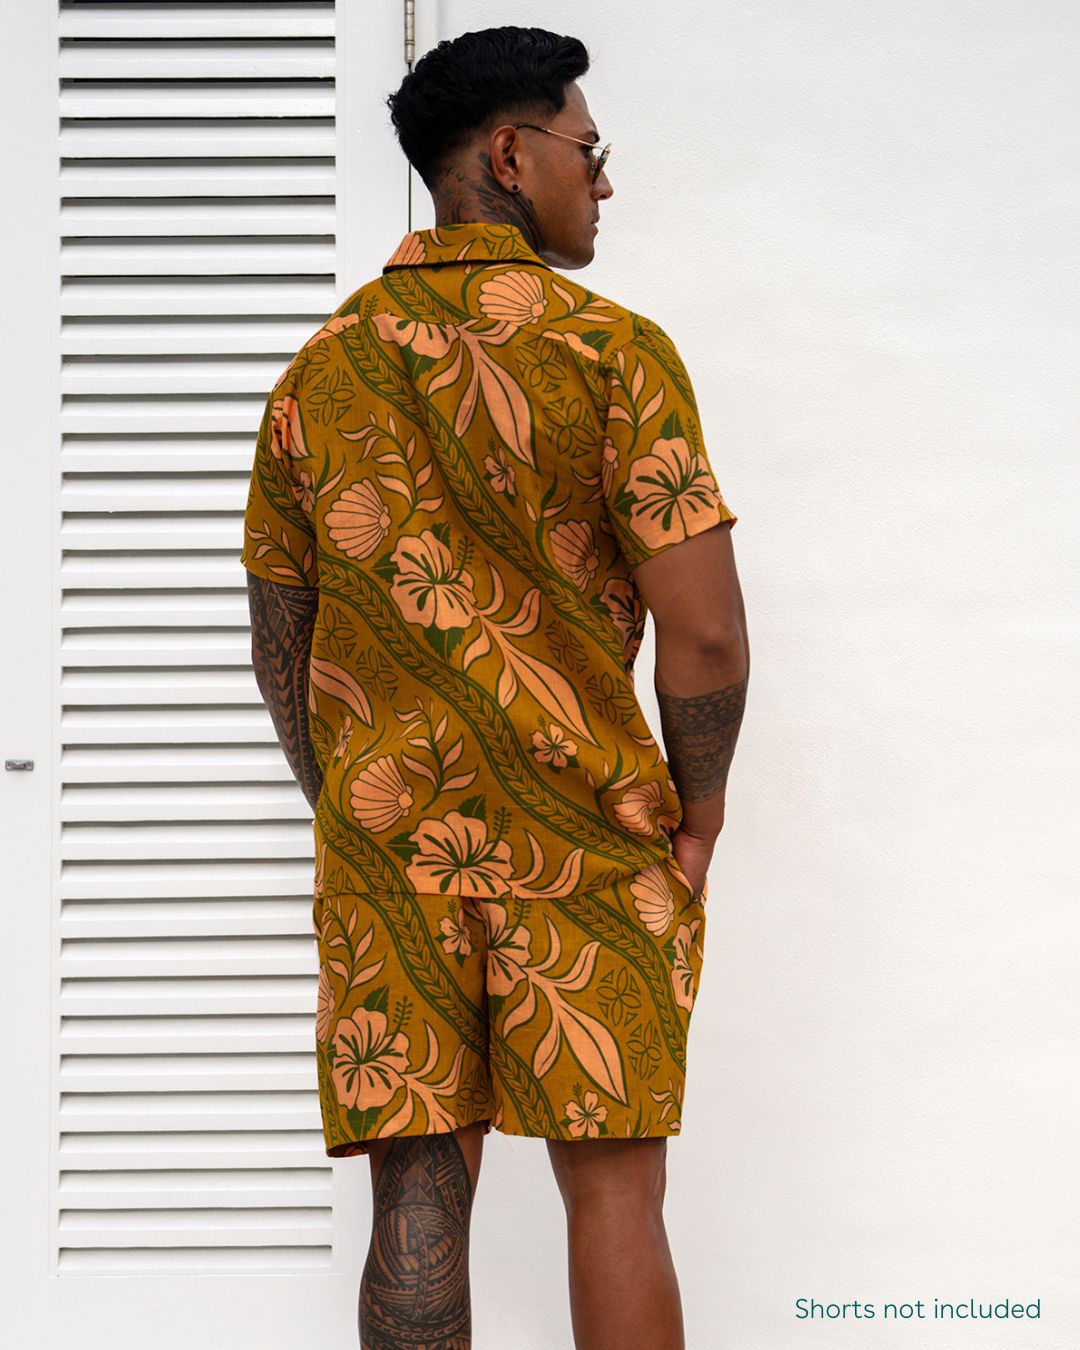 Kanoa Mens Short Sleeve Shirt - Island Vines Gold